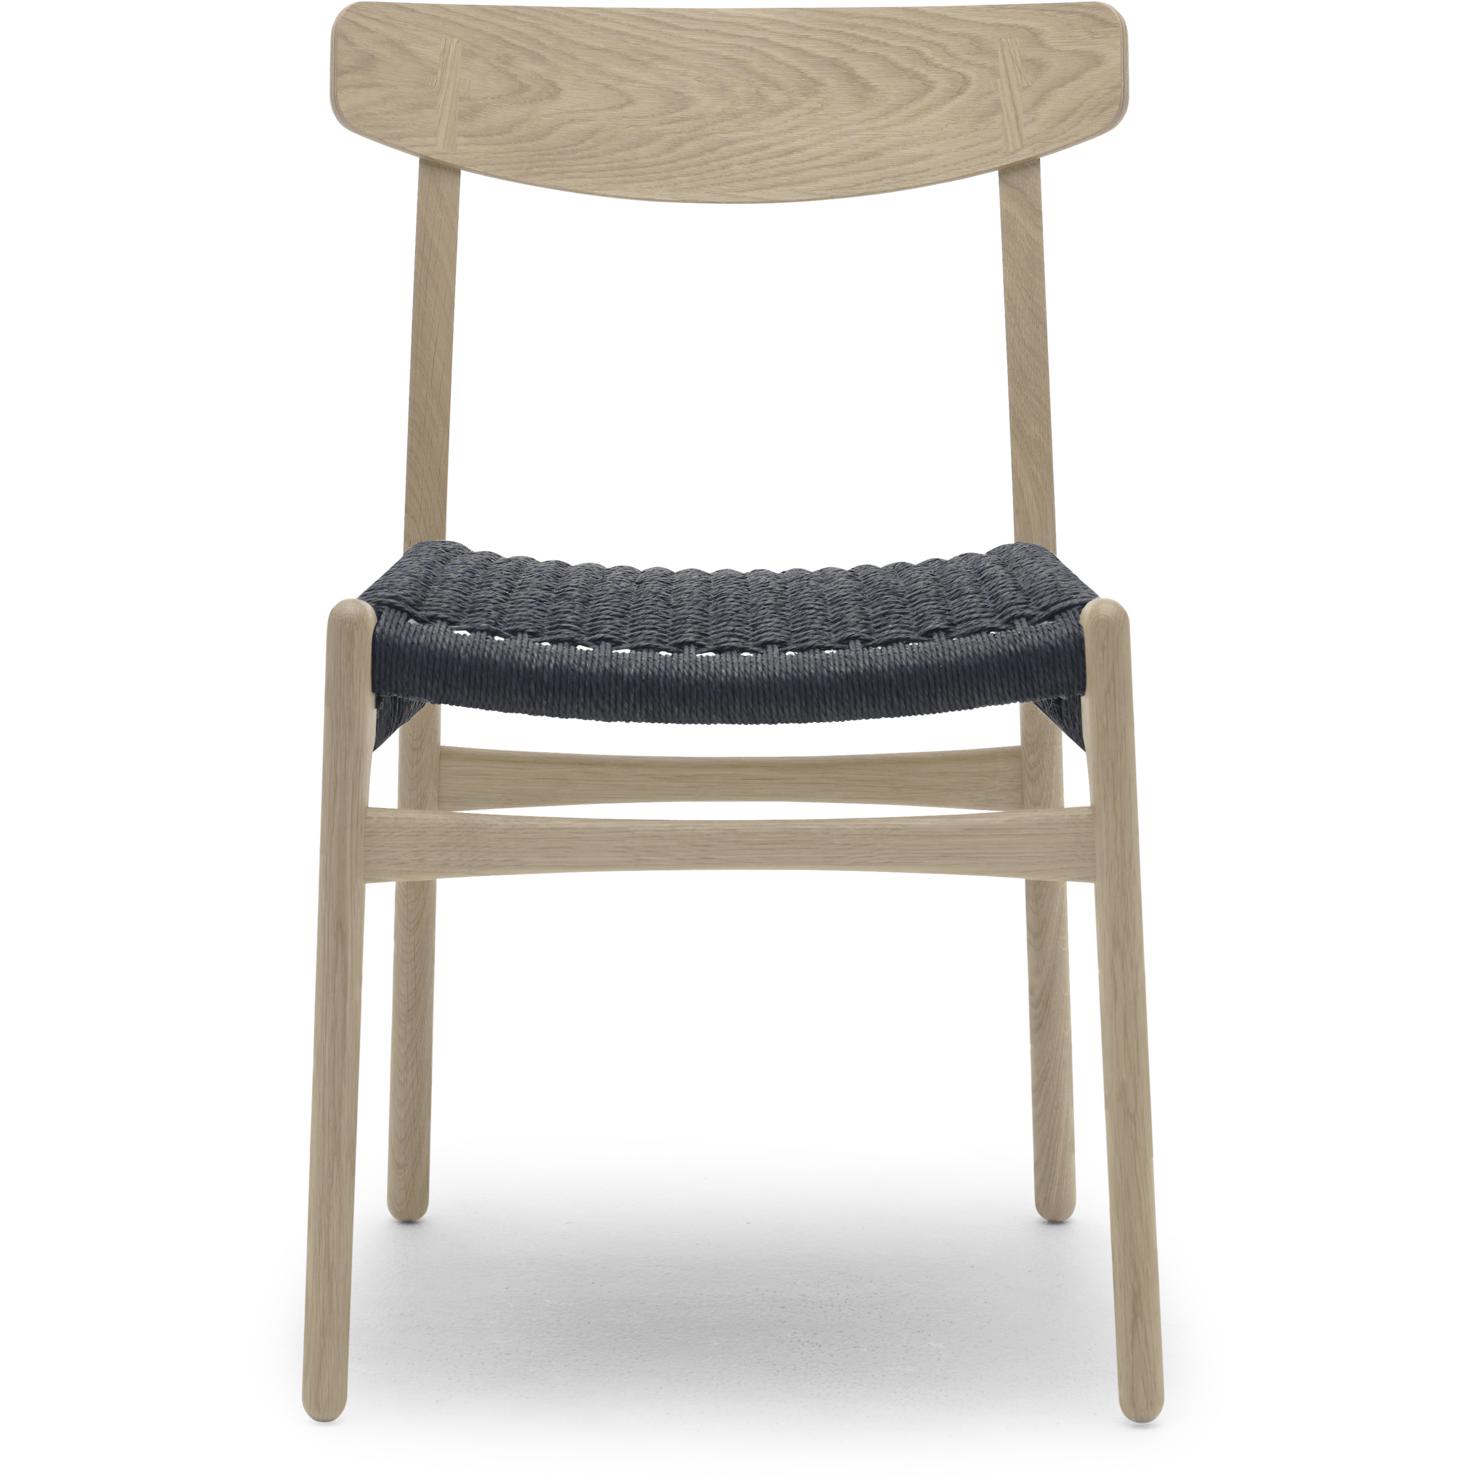 Carl Hansen CH23 -stol, ekvål/svart papperssladd